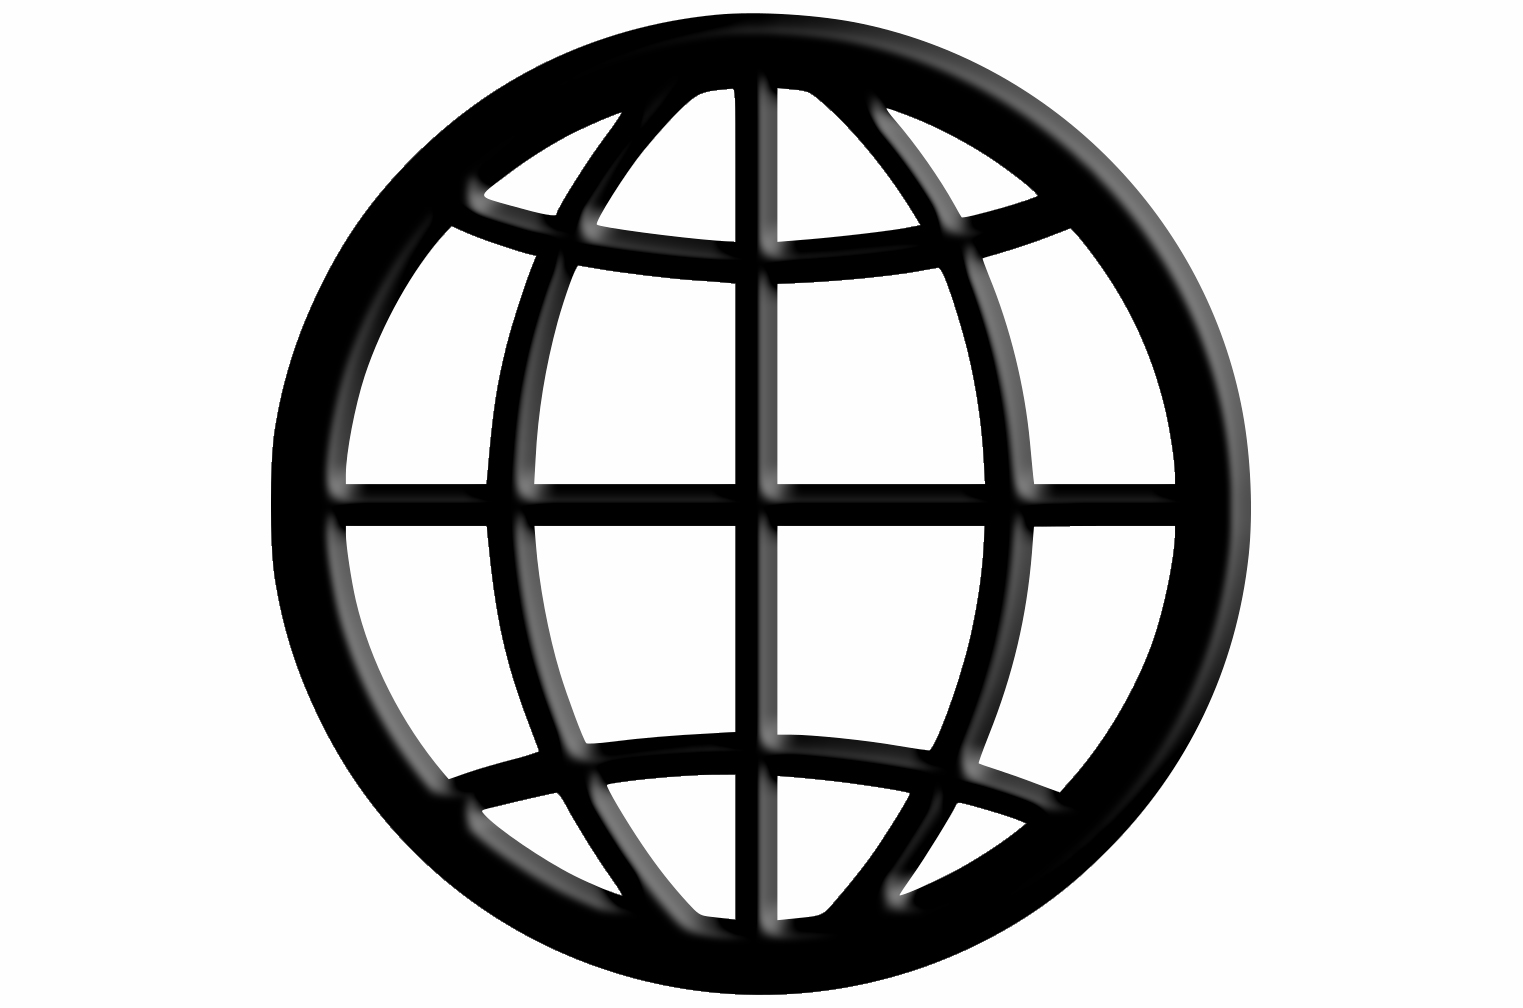 World icon. Глобус символ. Иконка интернет. Значок интернета. Символ земного шара.